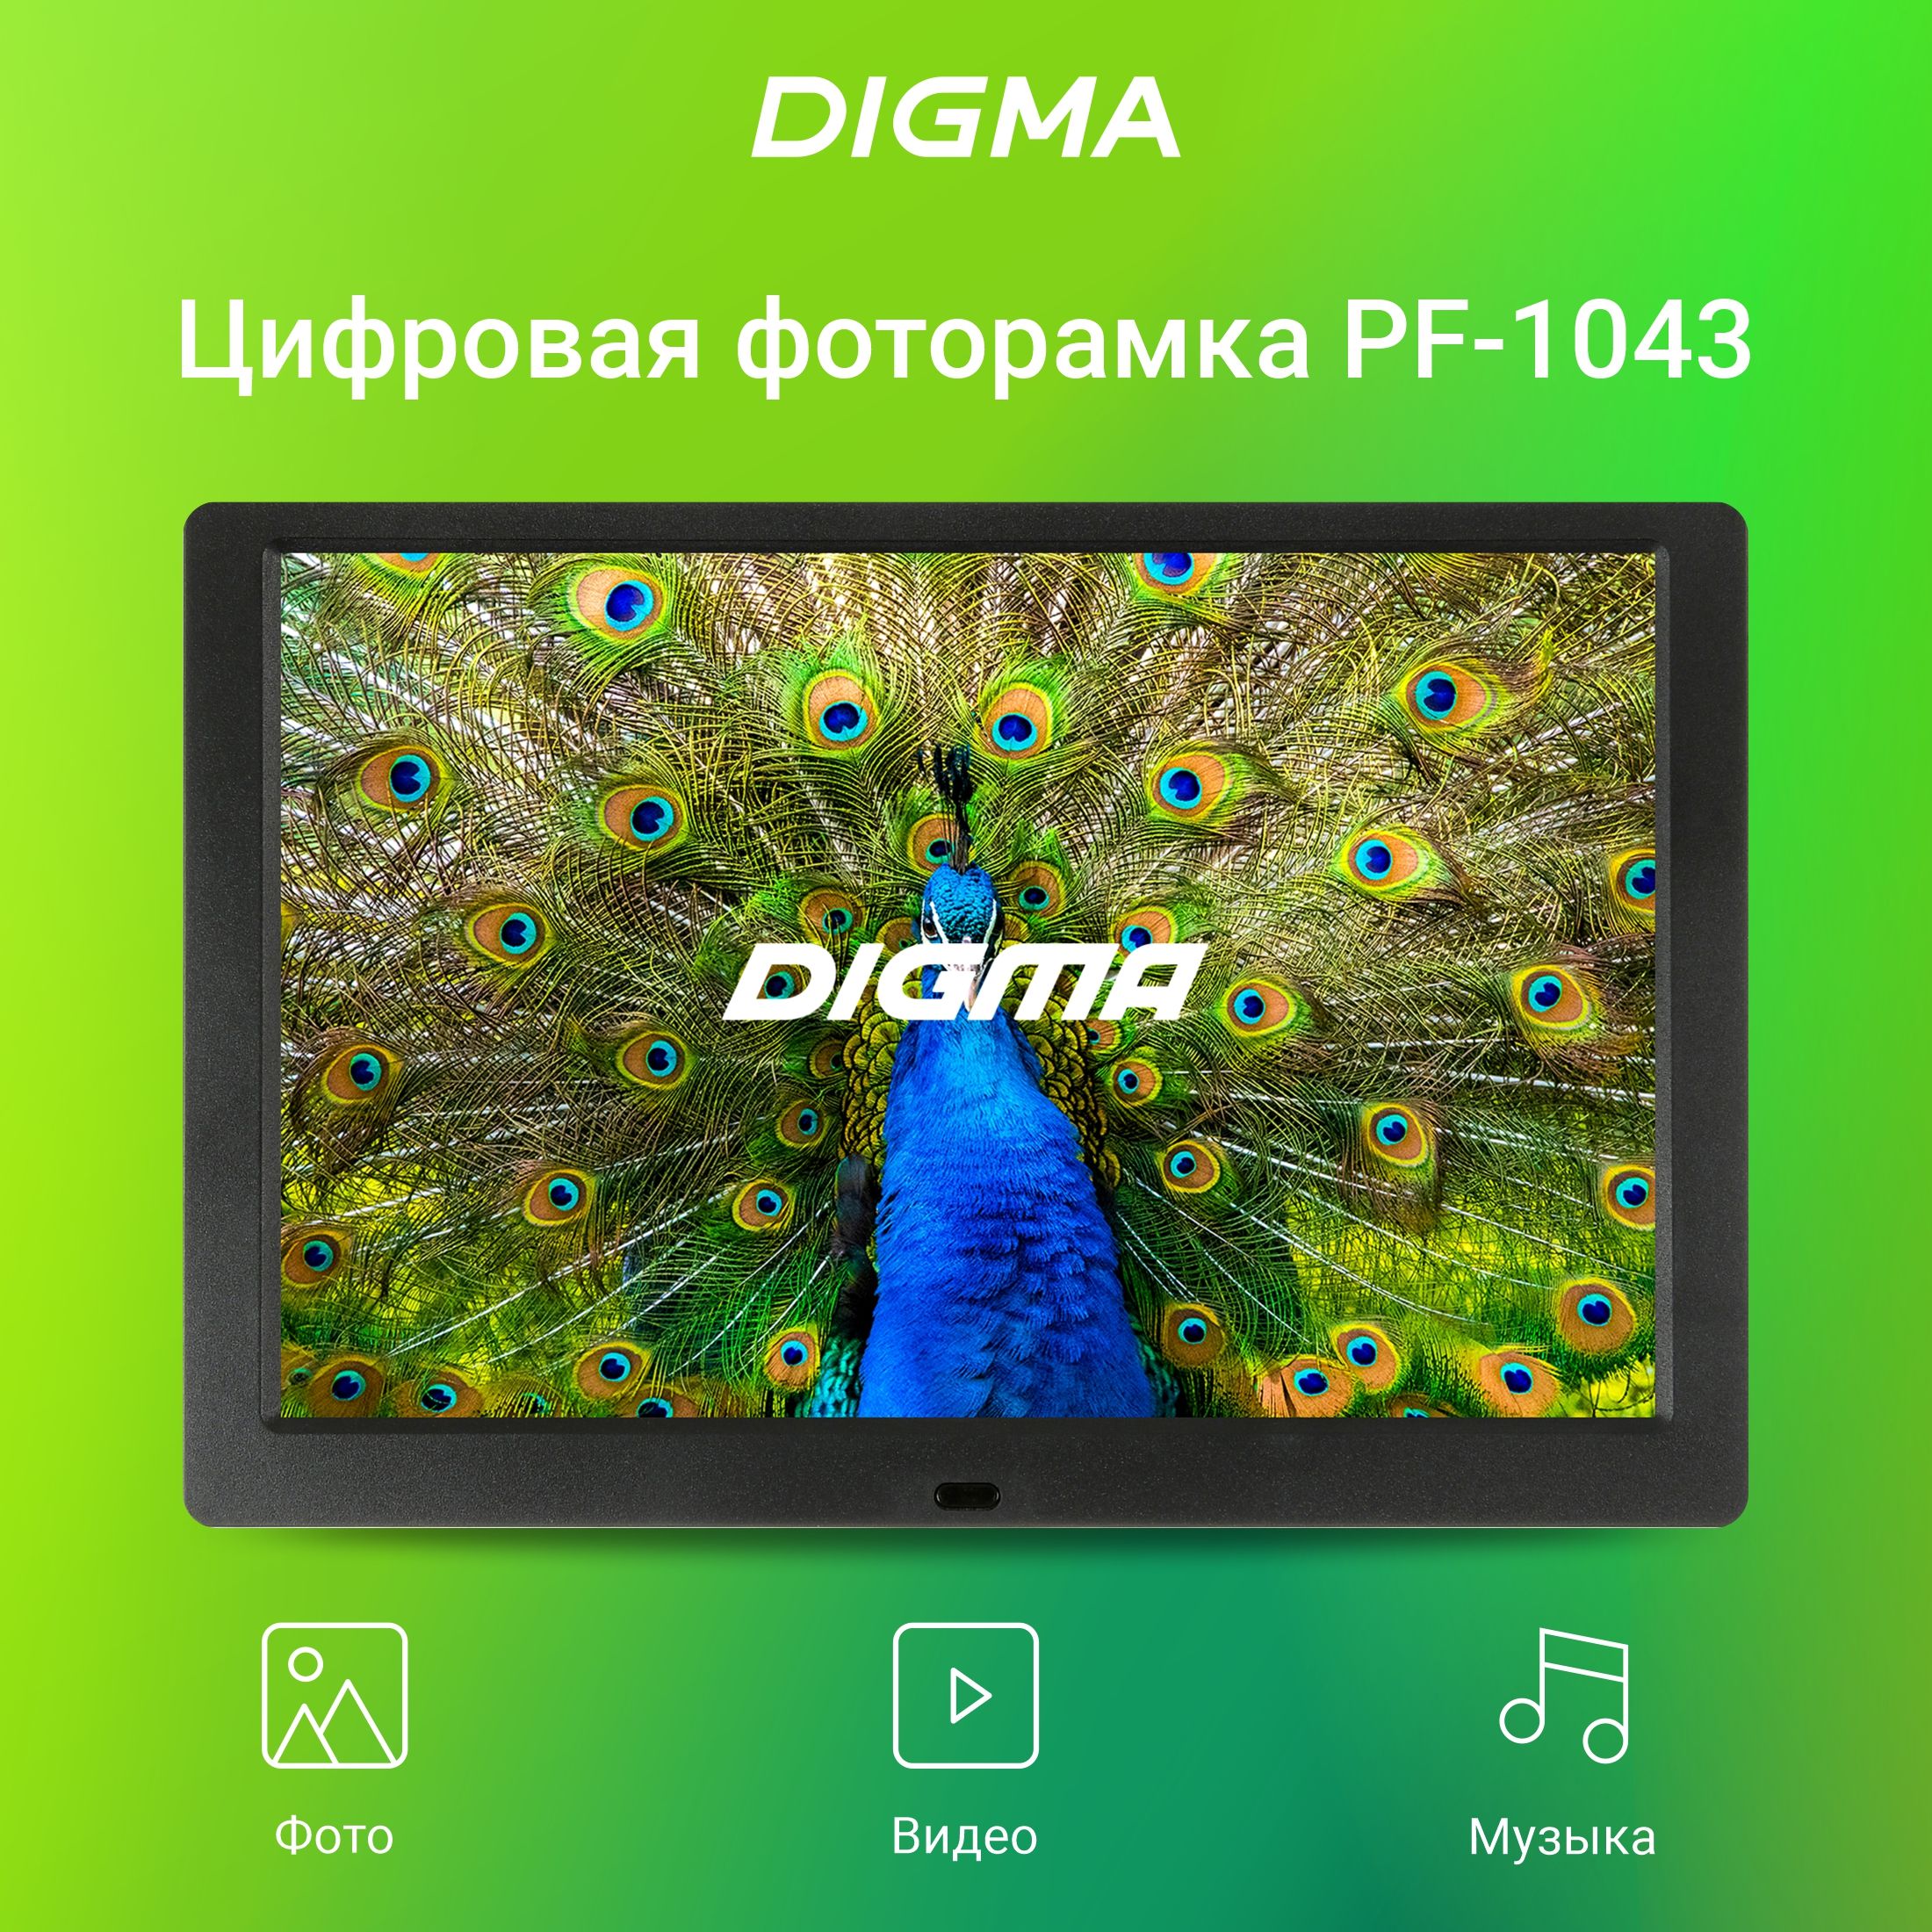 Digma Pf-1043